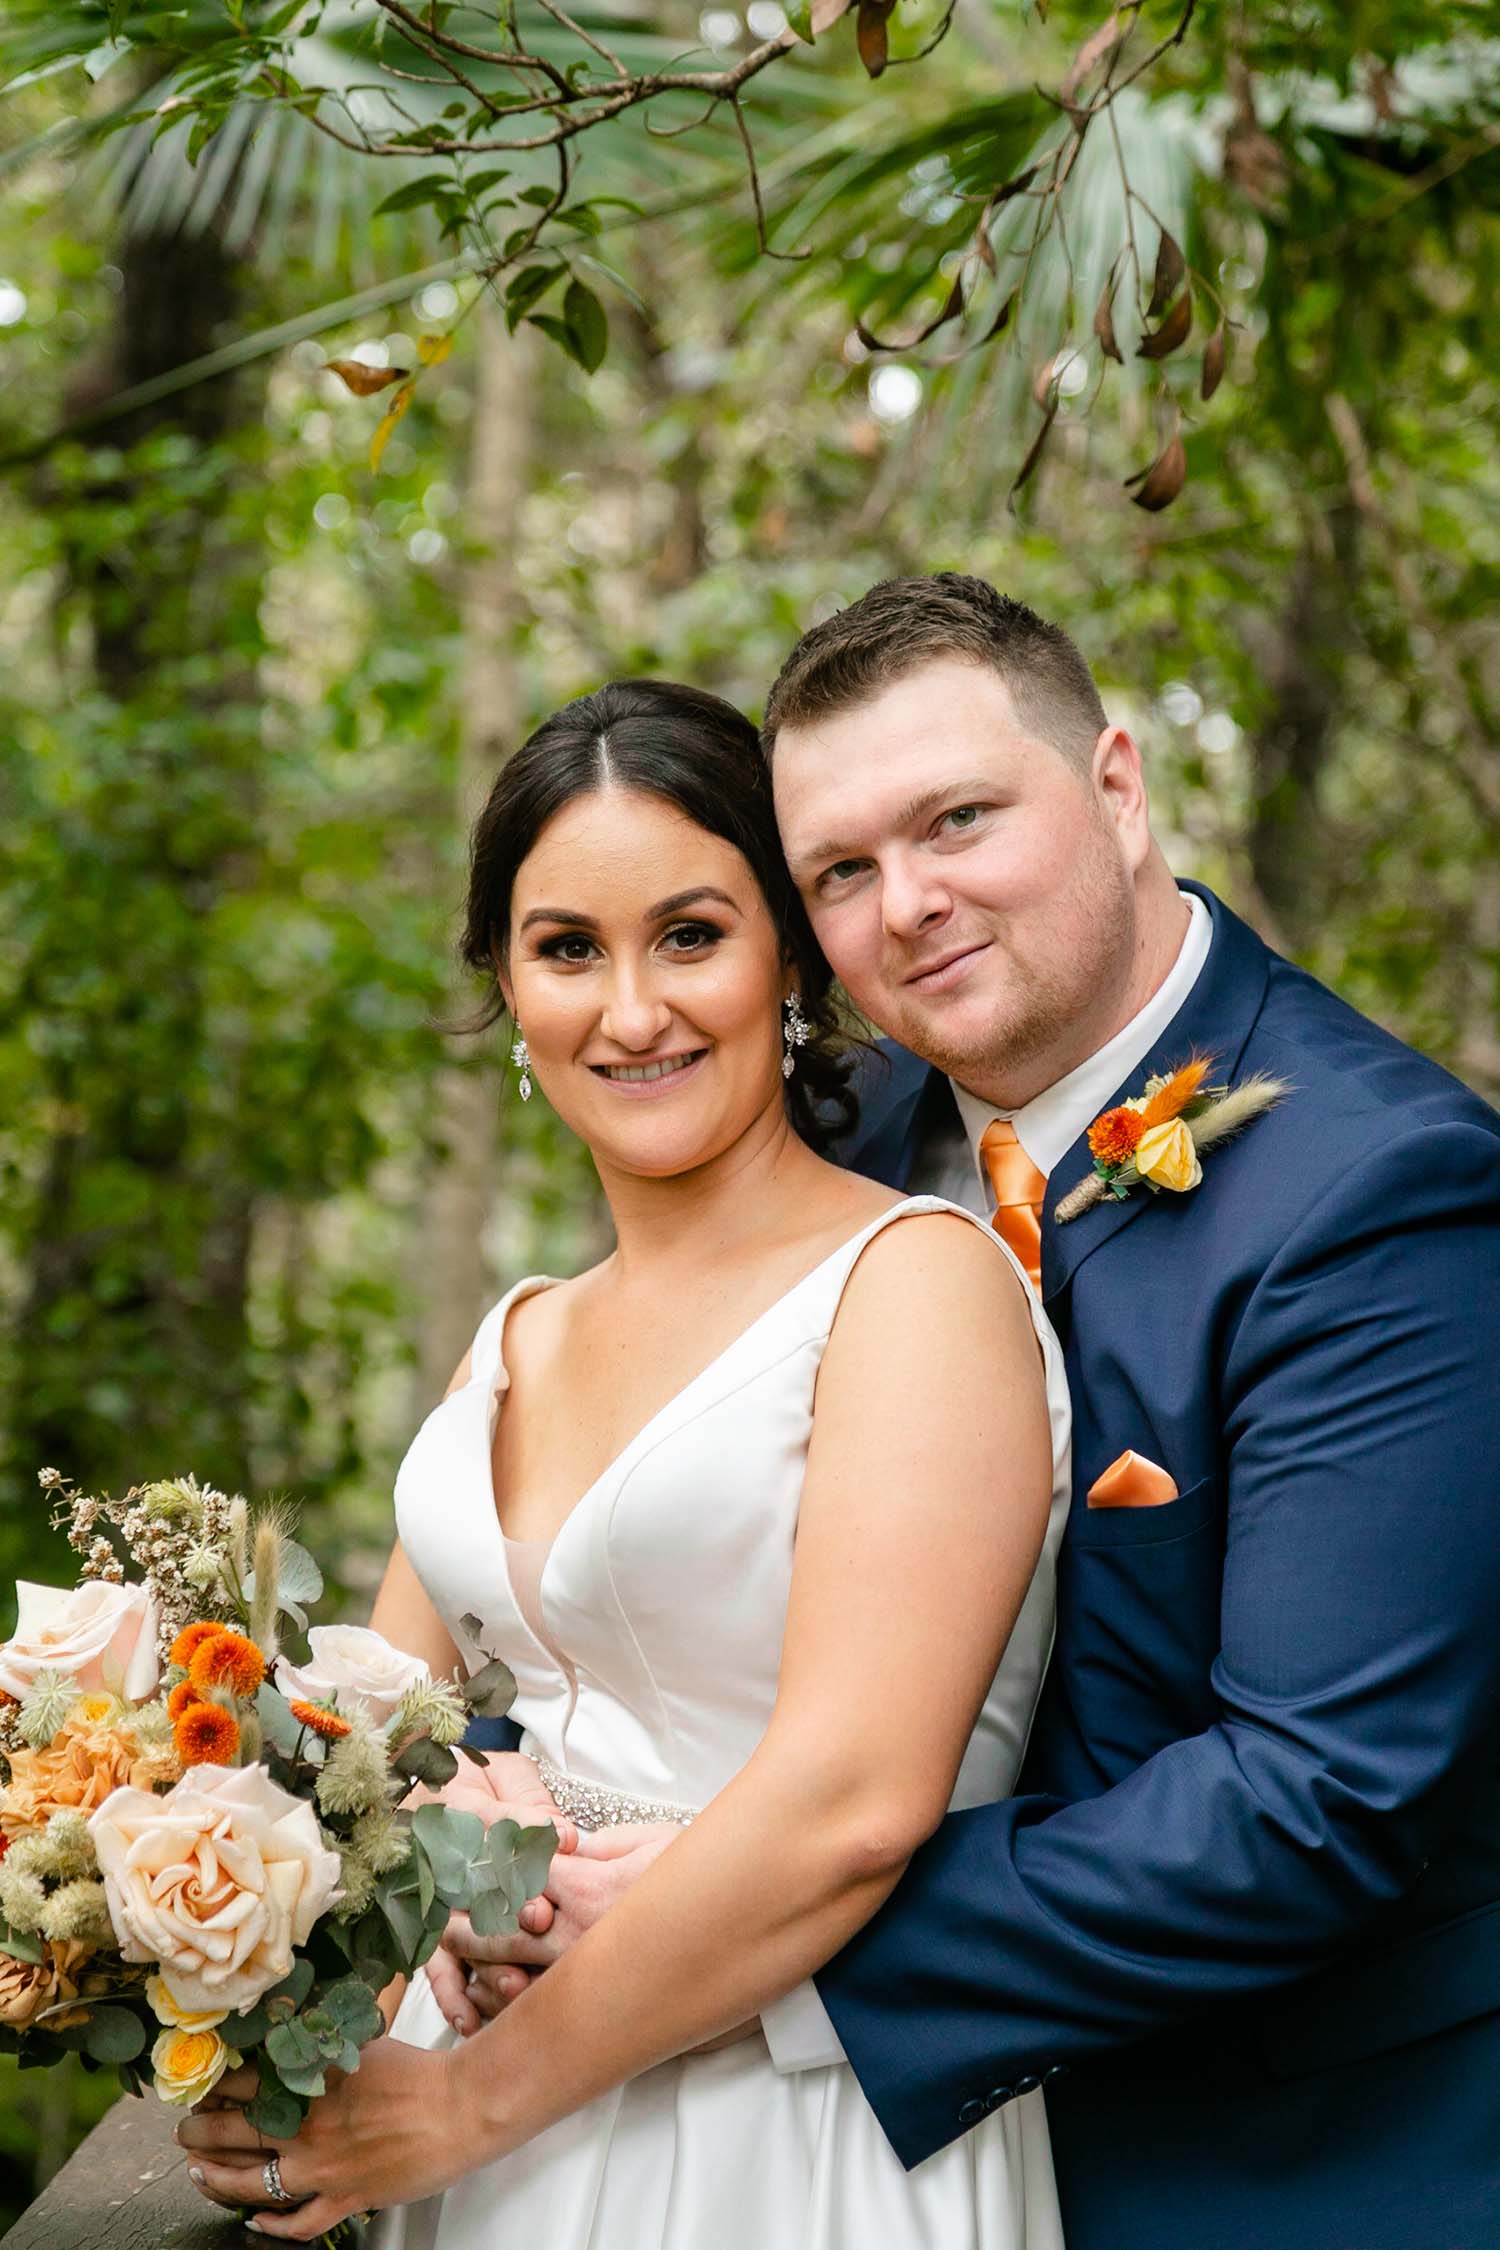 Wedding Photography - groom holding bride